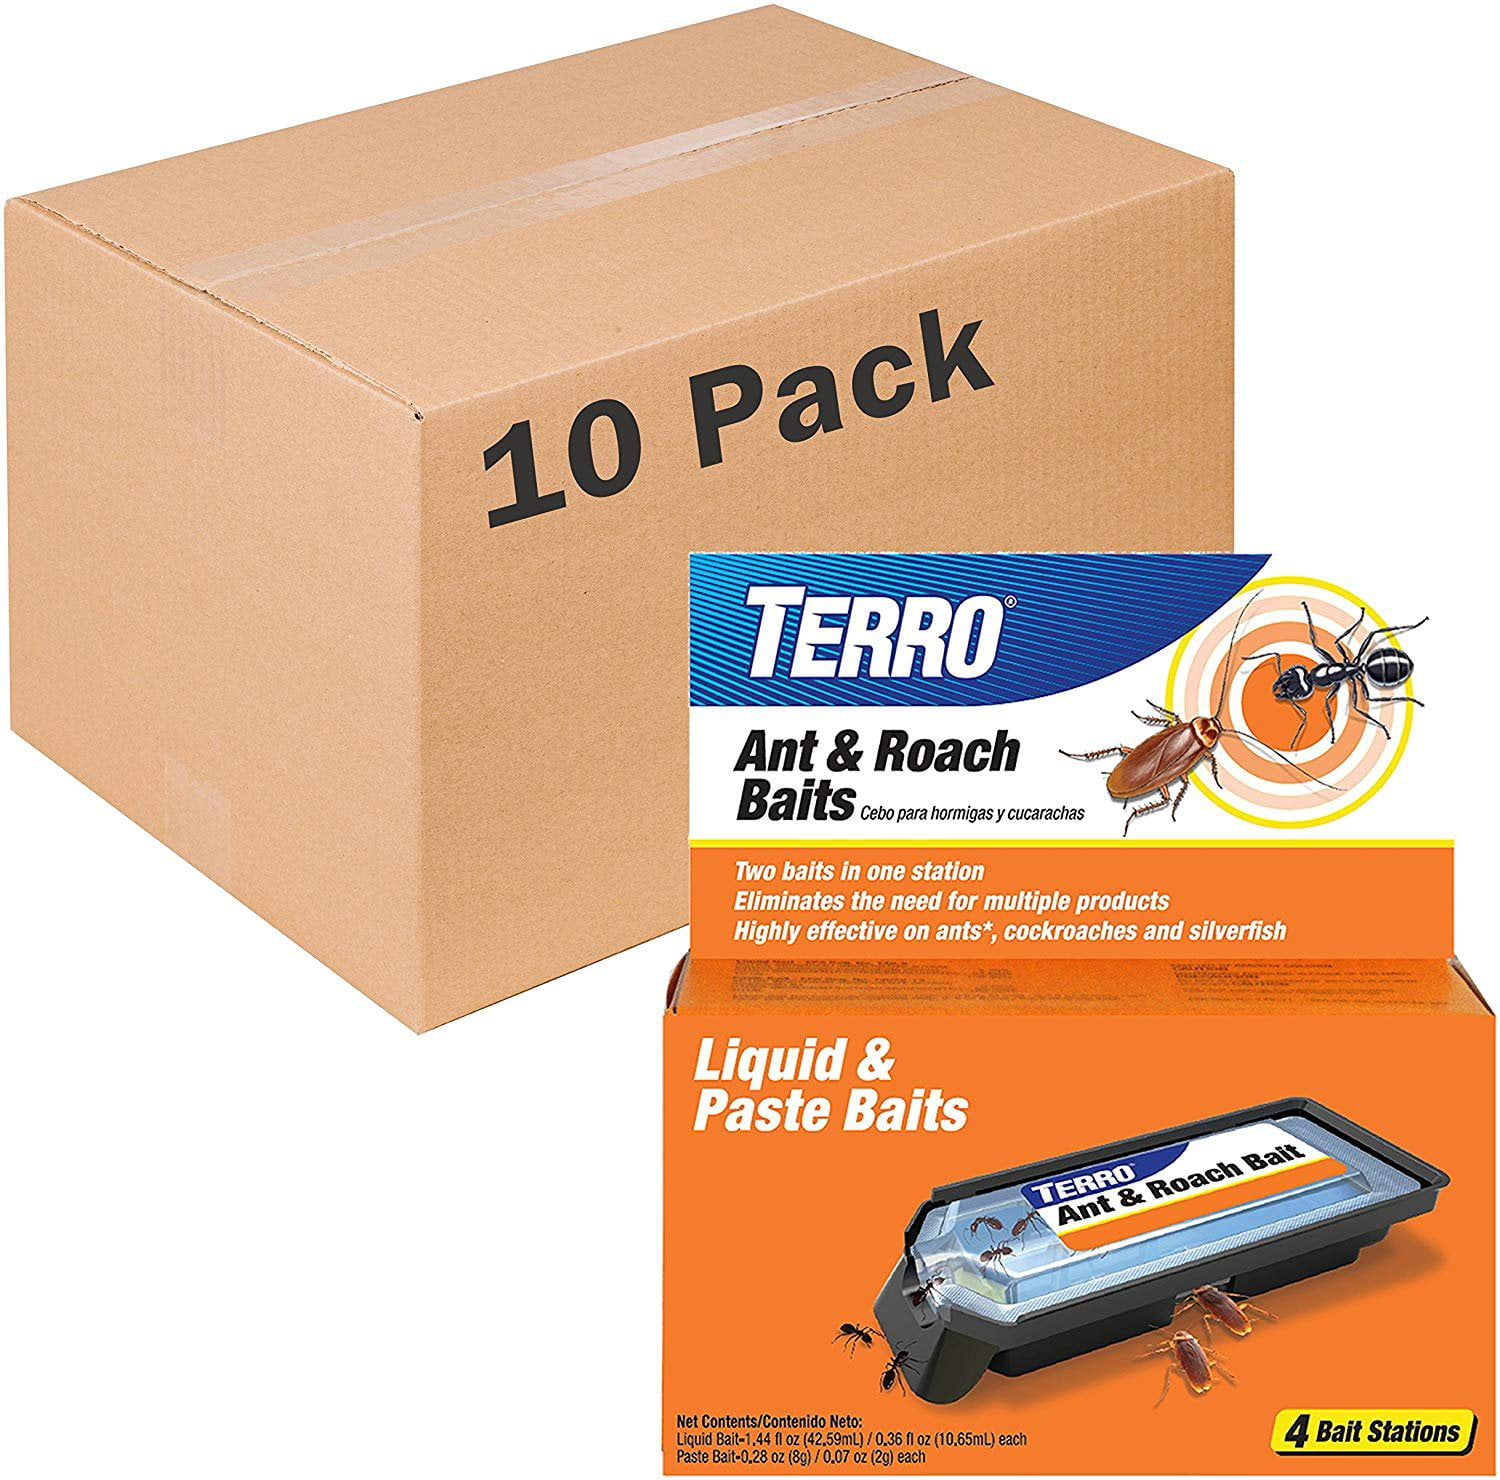 Terro T360 Ant & Roach Baits, 10 Pack, Black 